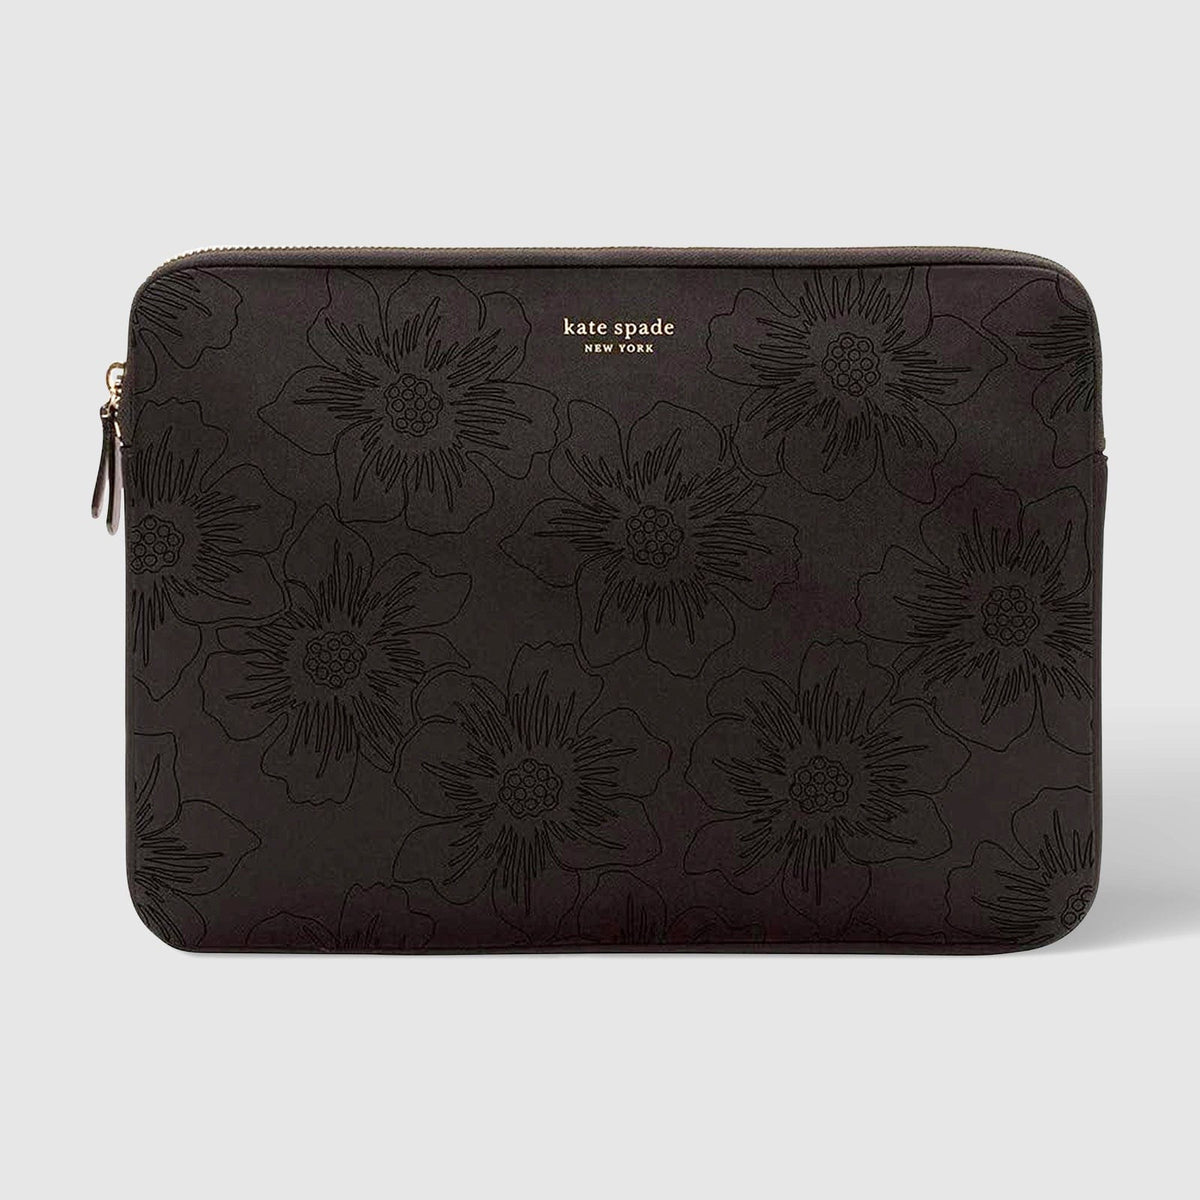 Buy Kate Spade New York Janie Medium Tote Women's Handbags (Soft Taupe) at  Amazon.in